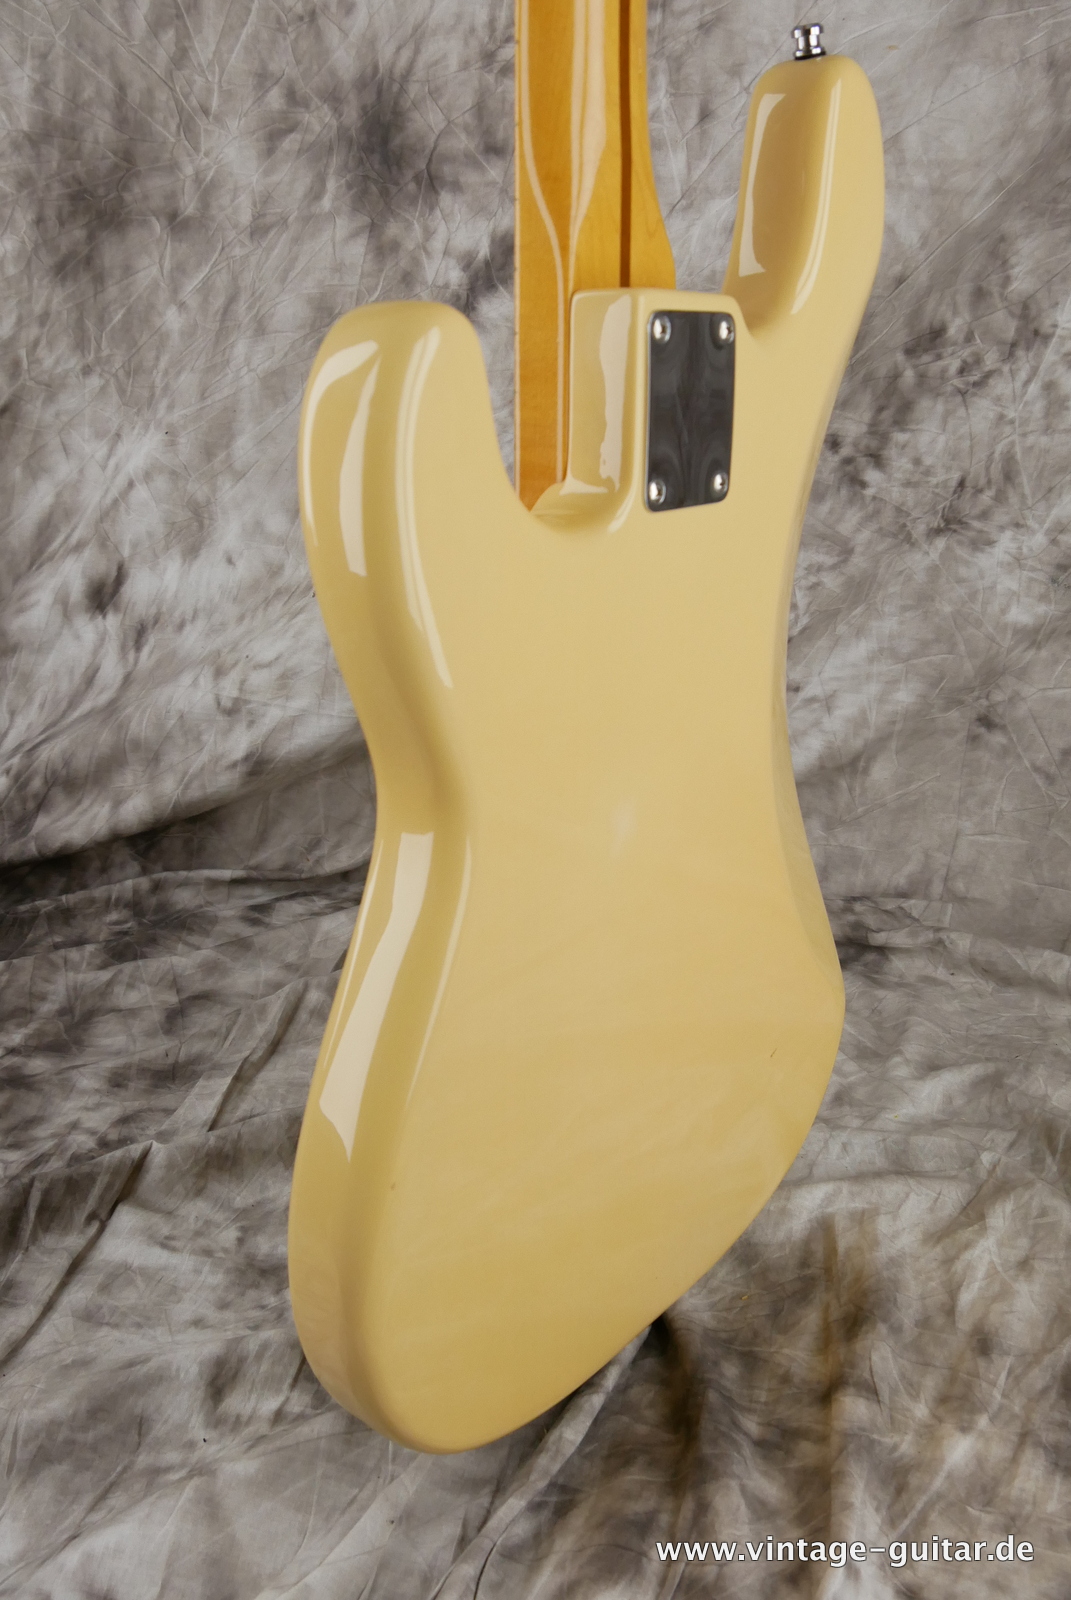 Fender-precision-mexico-2009-beige-007.JPG